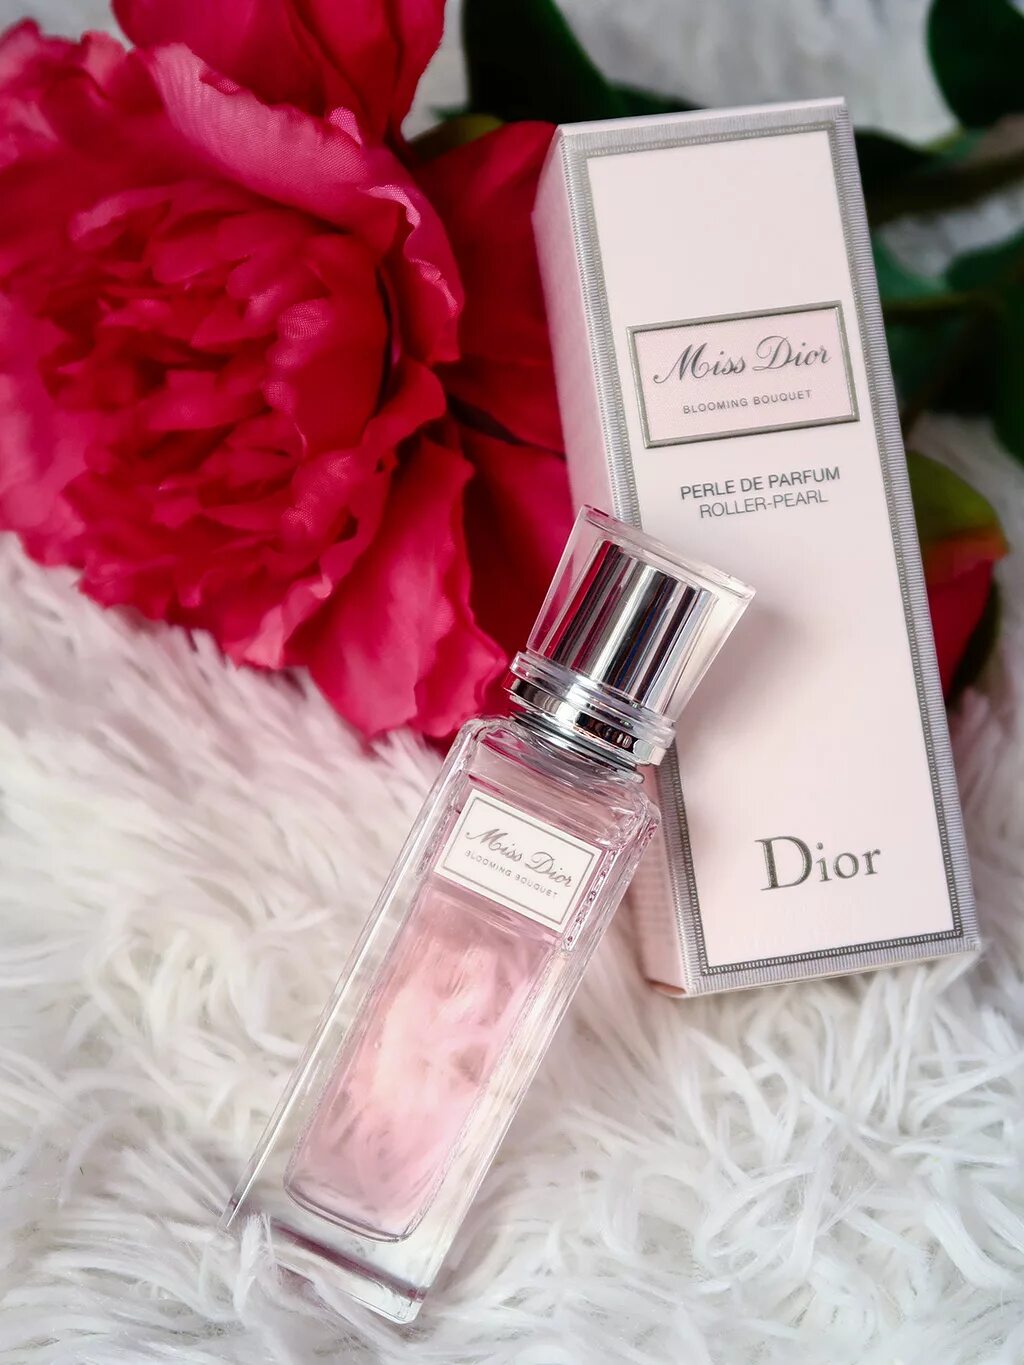 Купить диор букет. Dior Blooming Bouquet, Парфюм. Miss Dior Blooming Bouquet. Miss Dior Blooming Bouquet флакон. Dior Blooming Bouquet 75008.